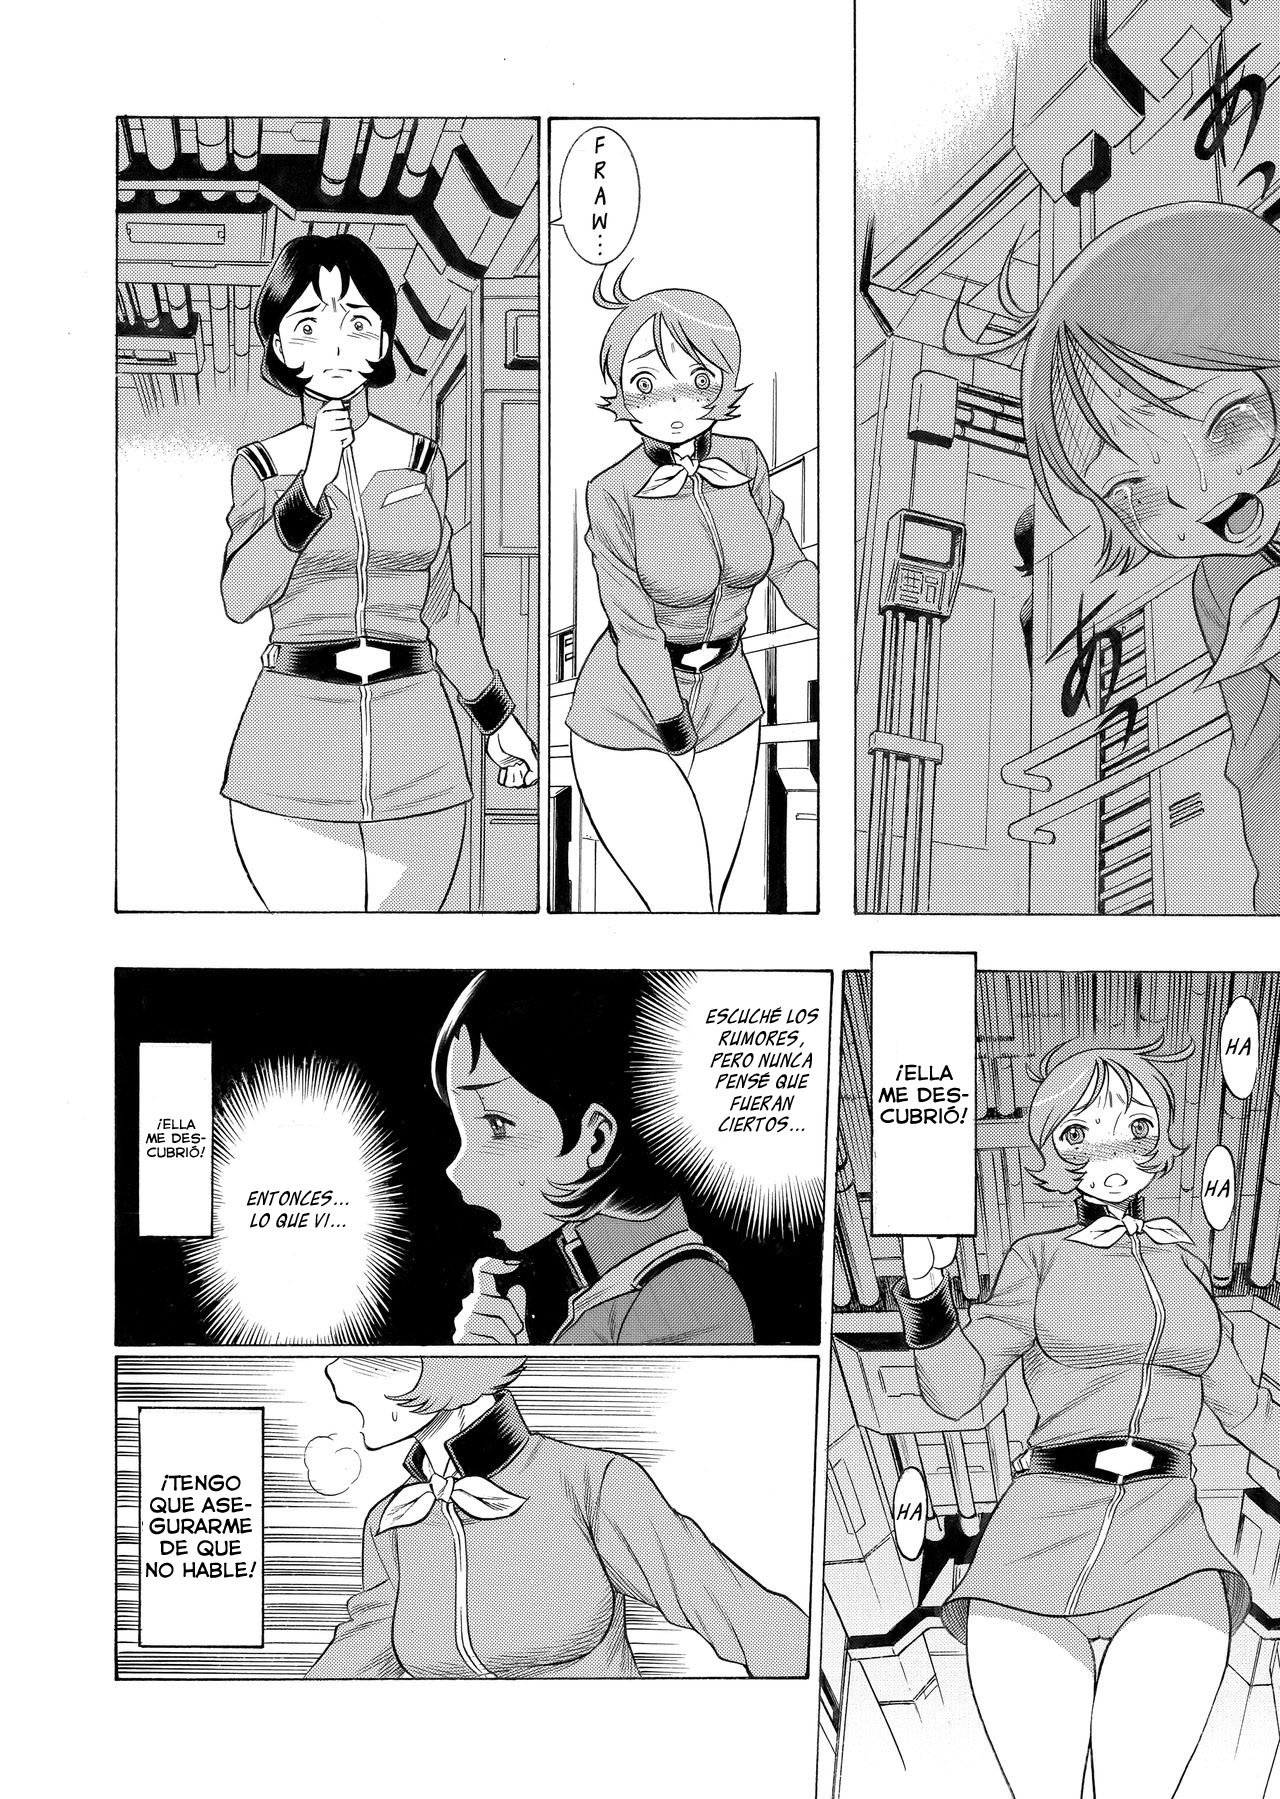 [Mobile Suit Gundam] Reijoh - Slave Girl - 20